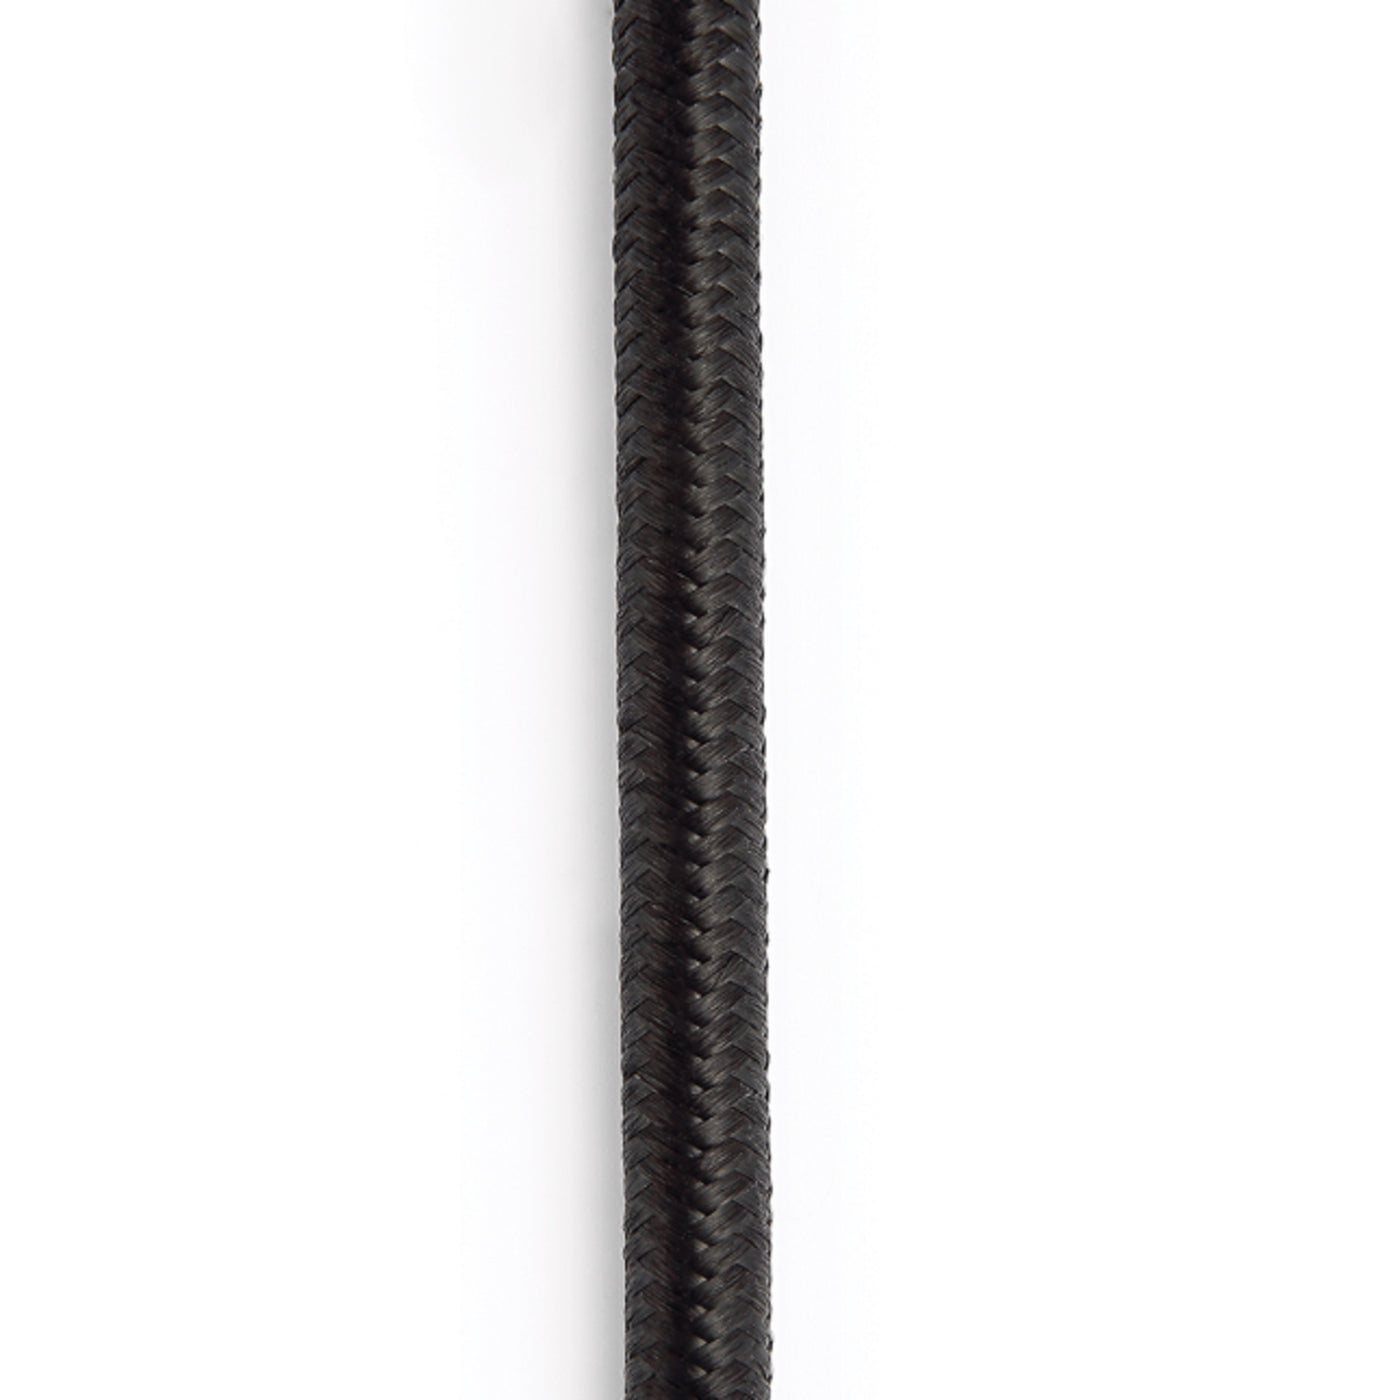 D'Addario Custom Series Braided Instrument Cable, Black, 10' (PW-BG-10BK)